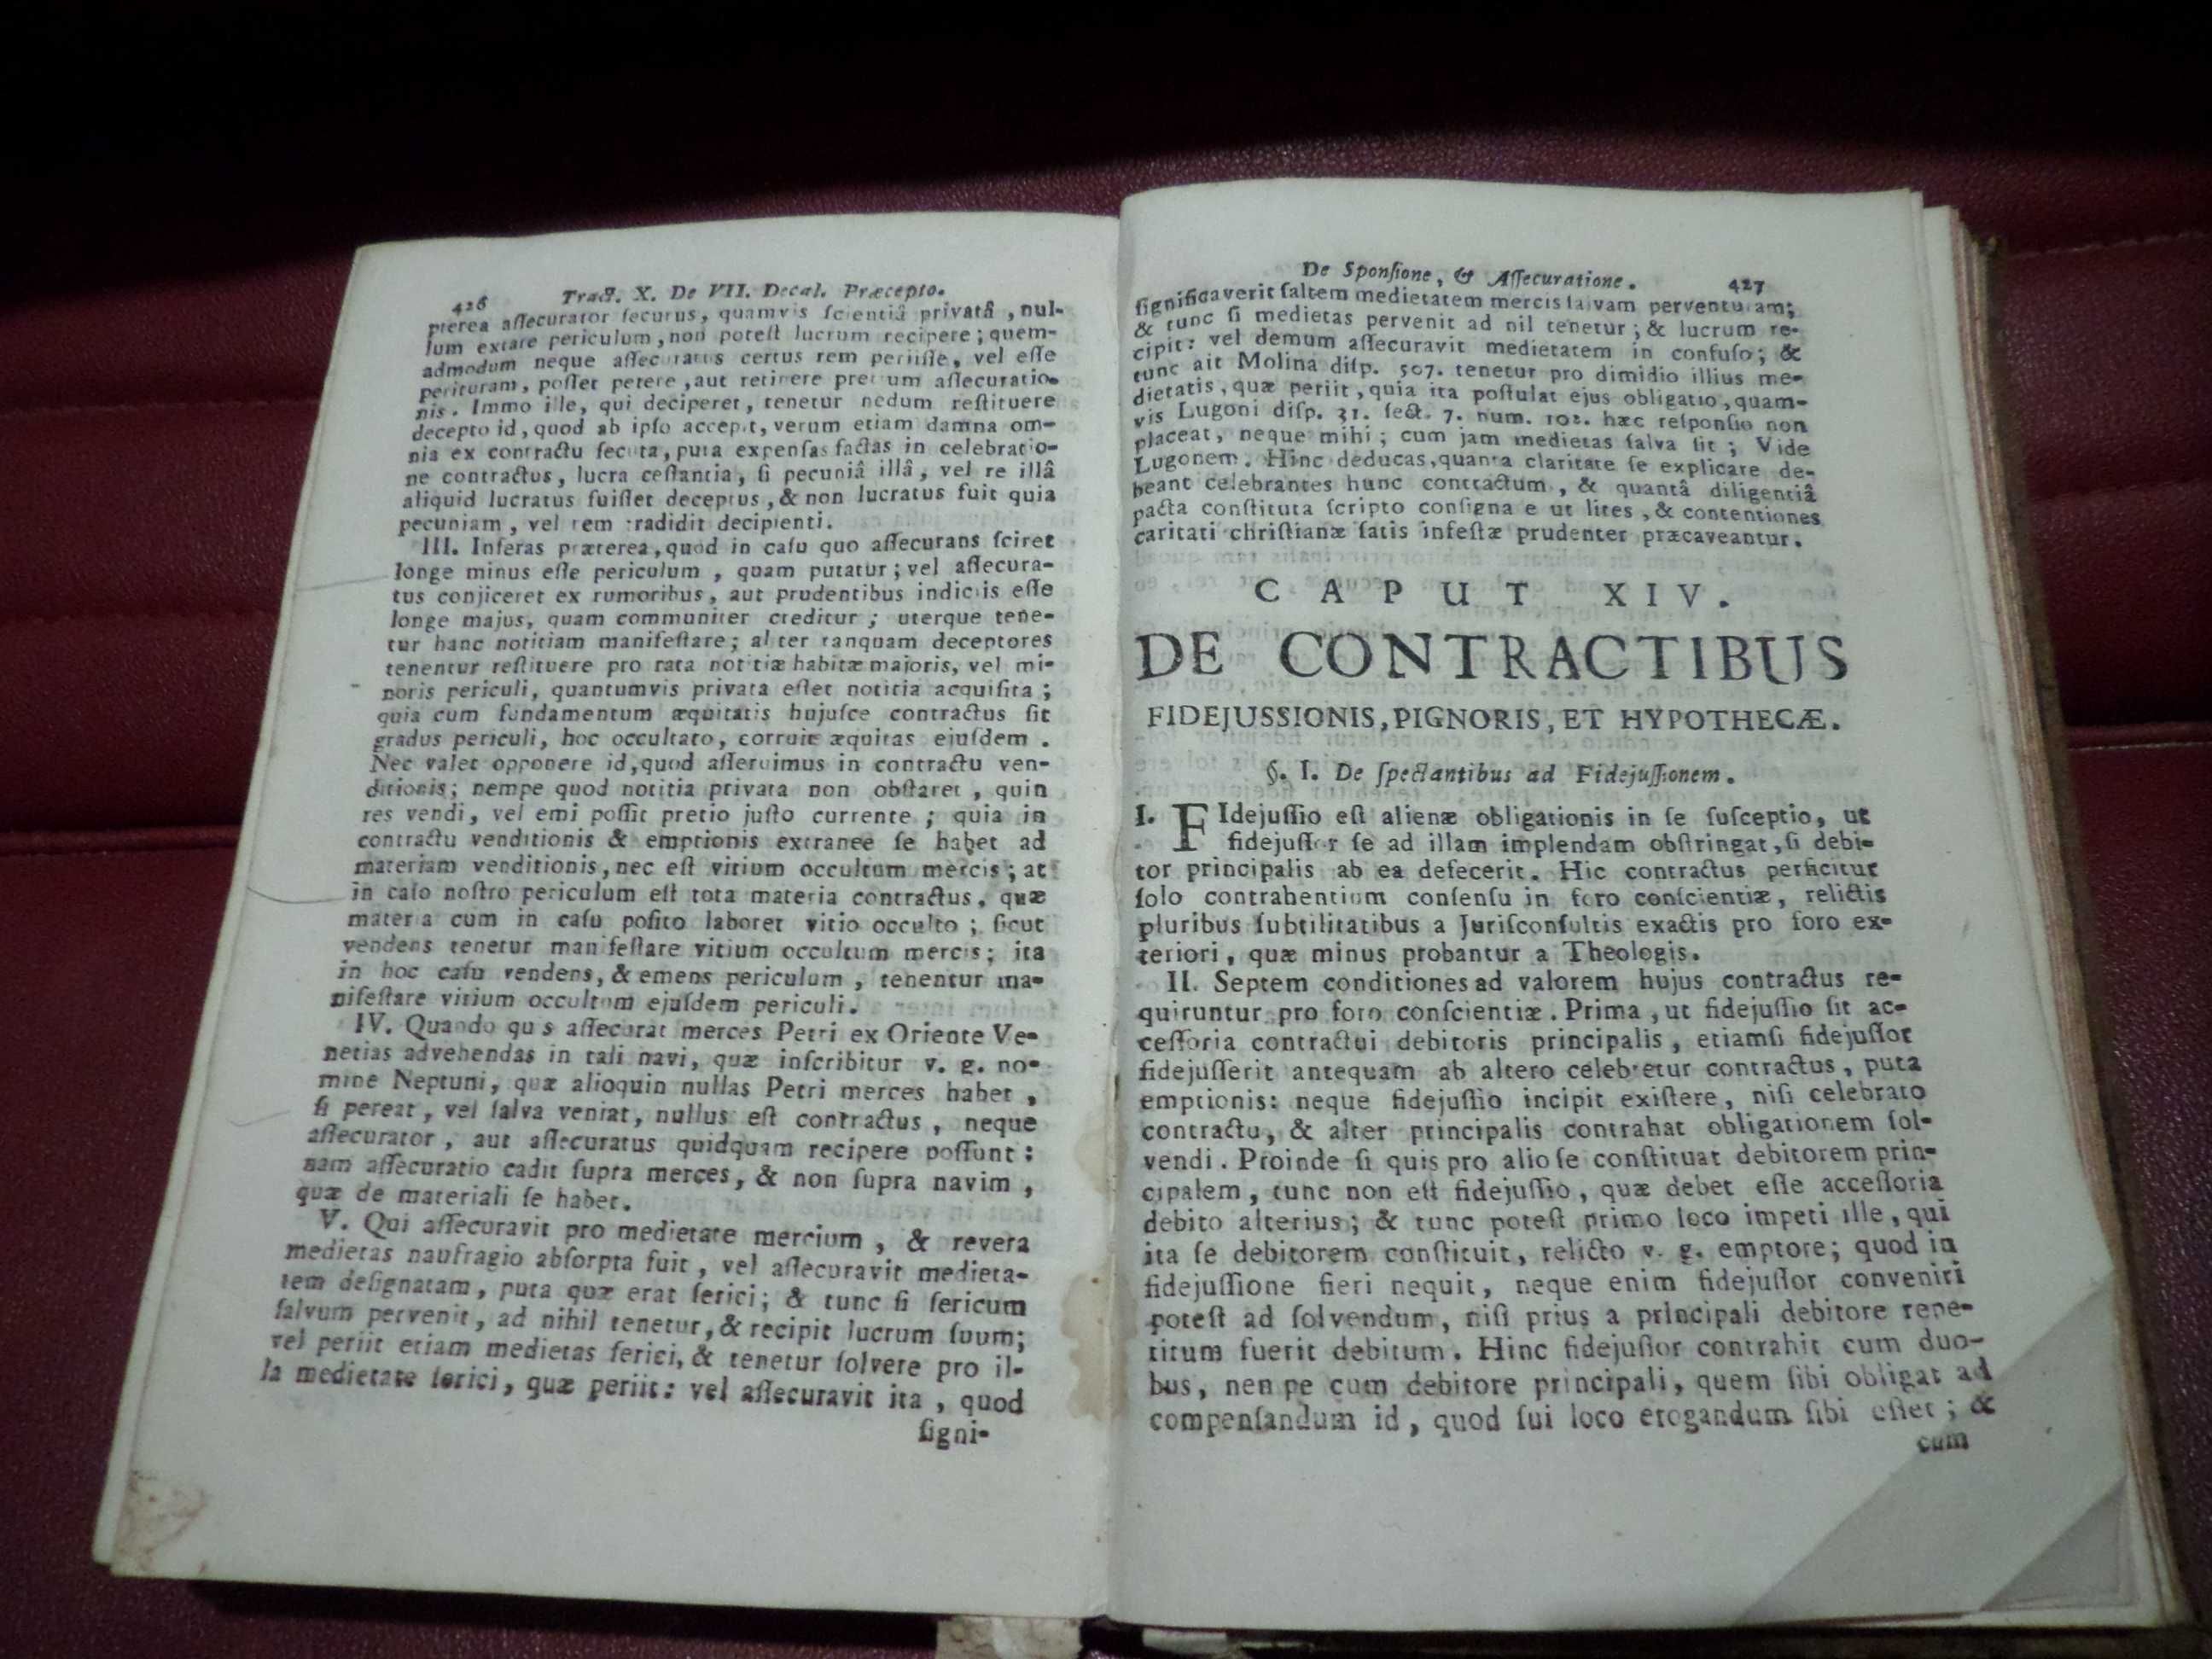 Livro Sec. XVIII  'Theologiae Moralis'  Tomus Secundus